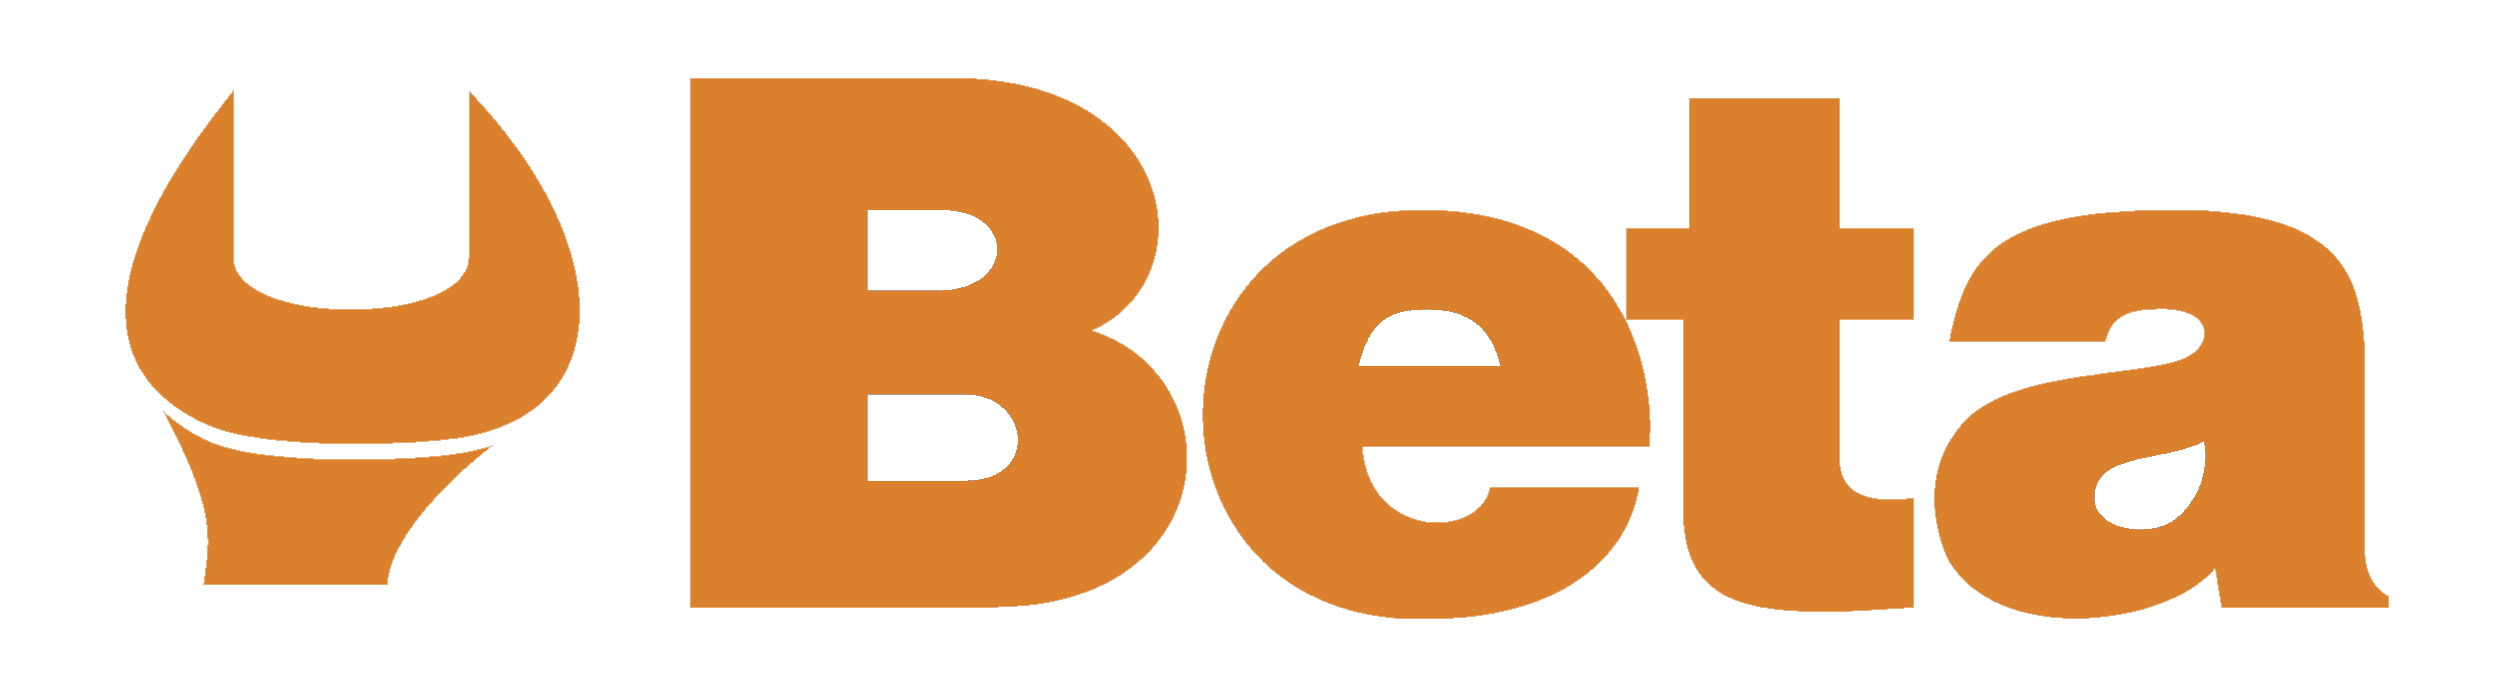 Logo de la marca Beta